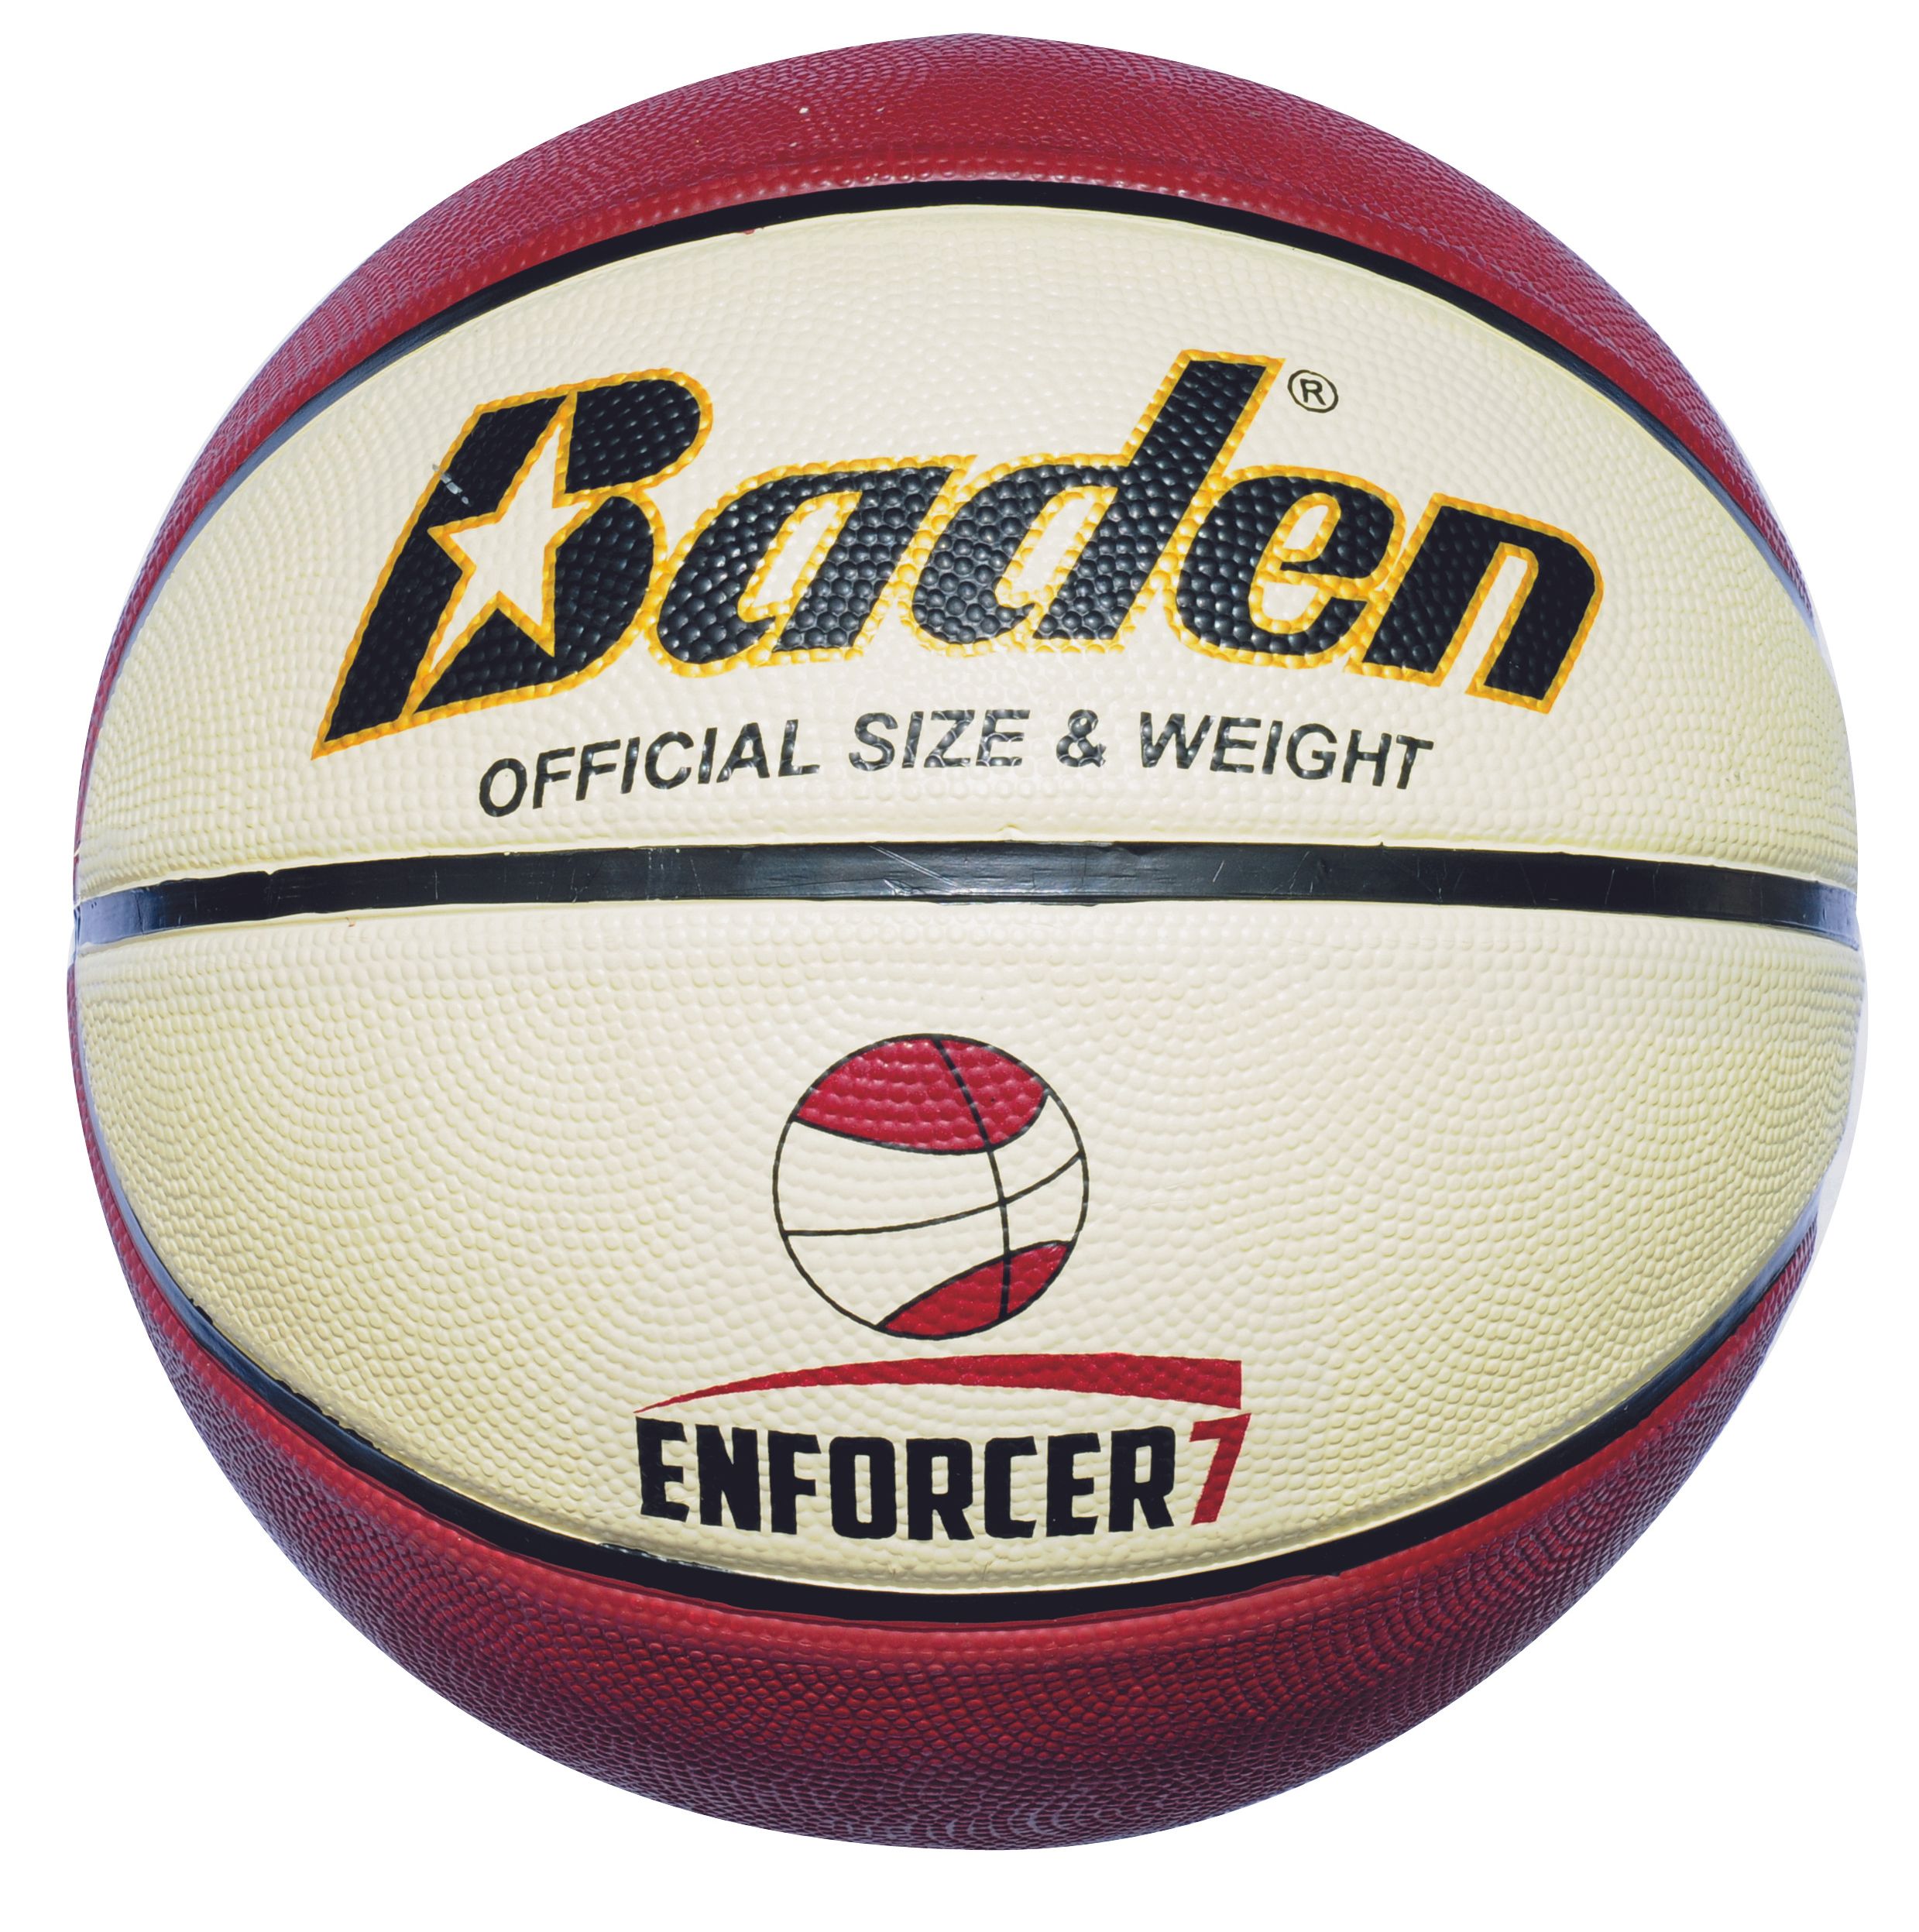 B?íden Enforcer Basketball - Size 7